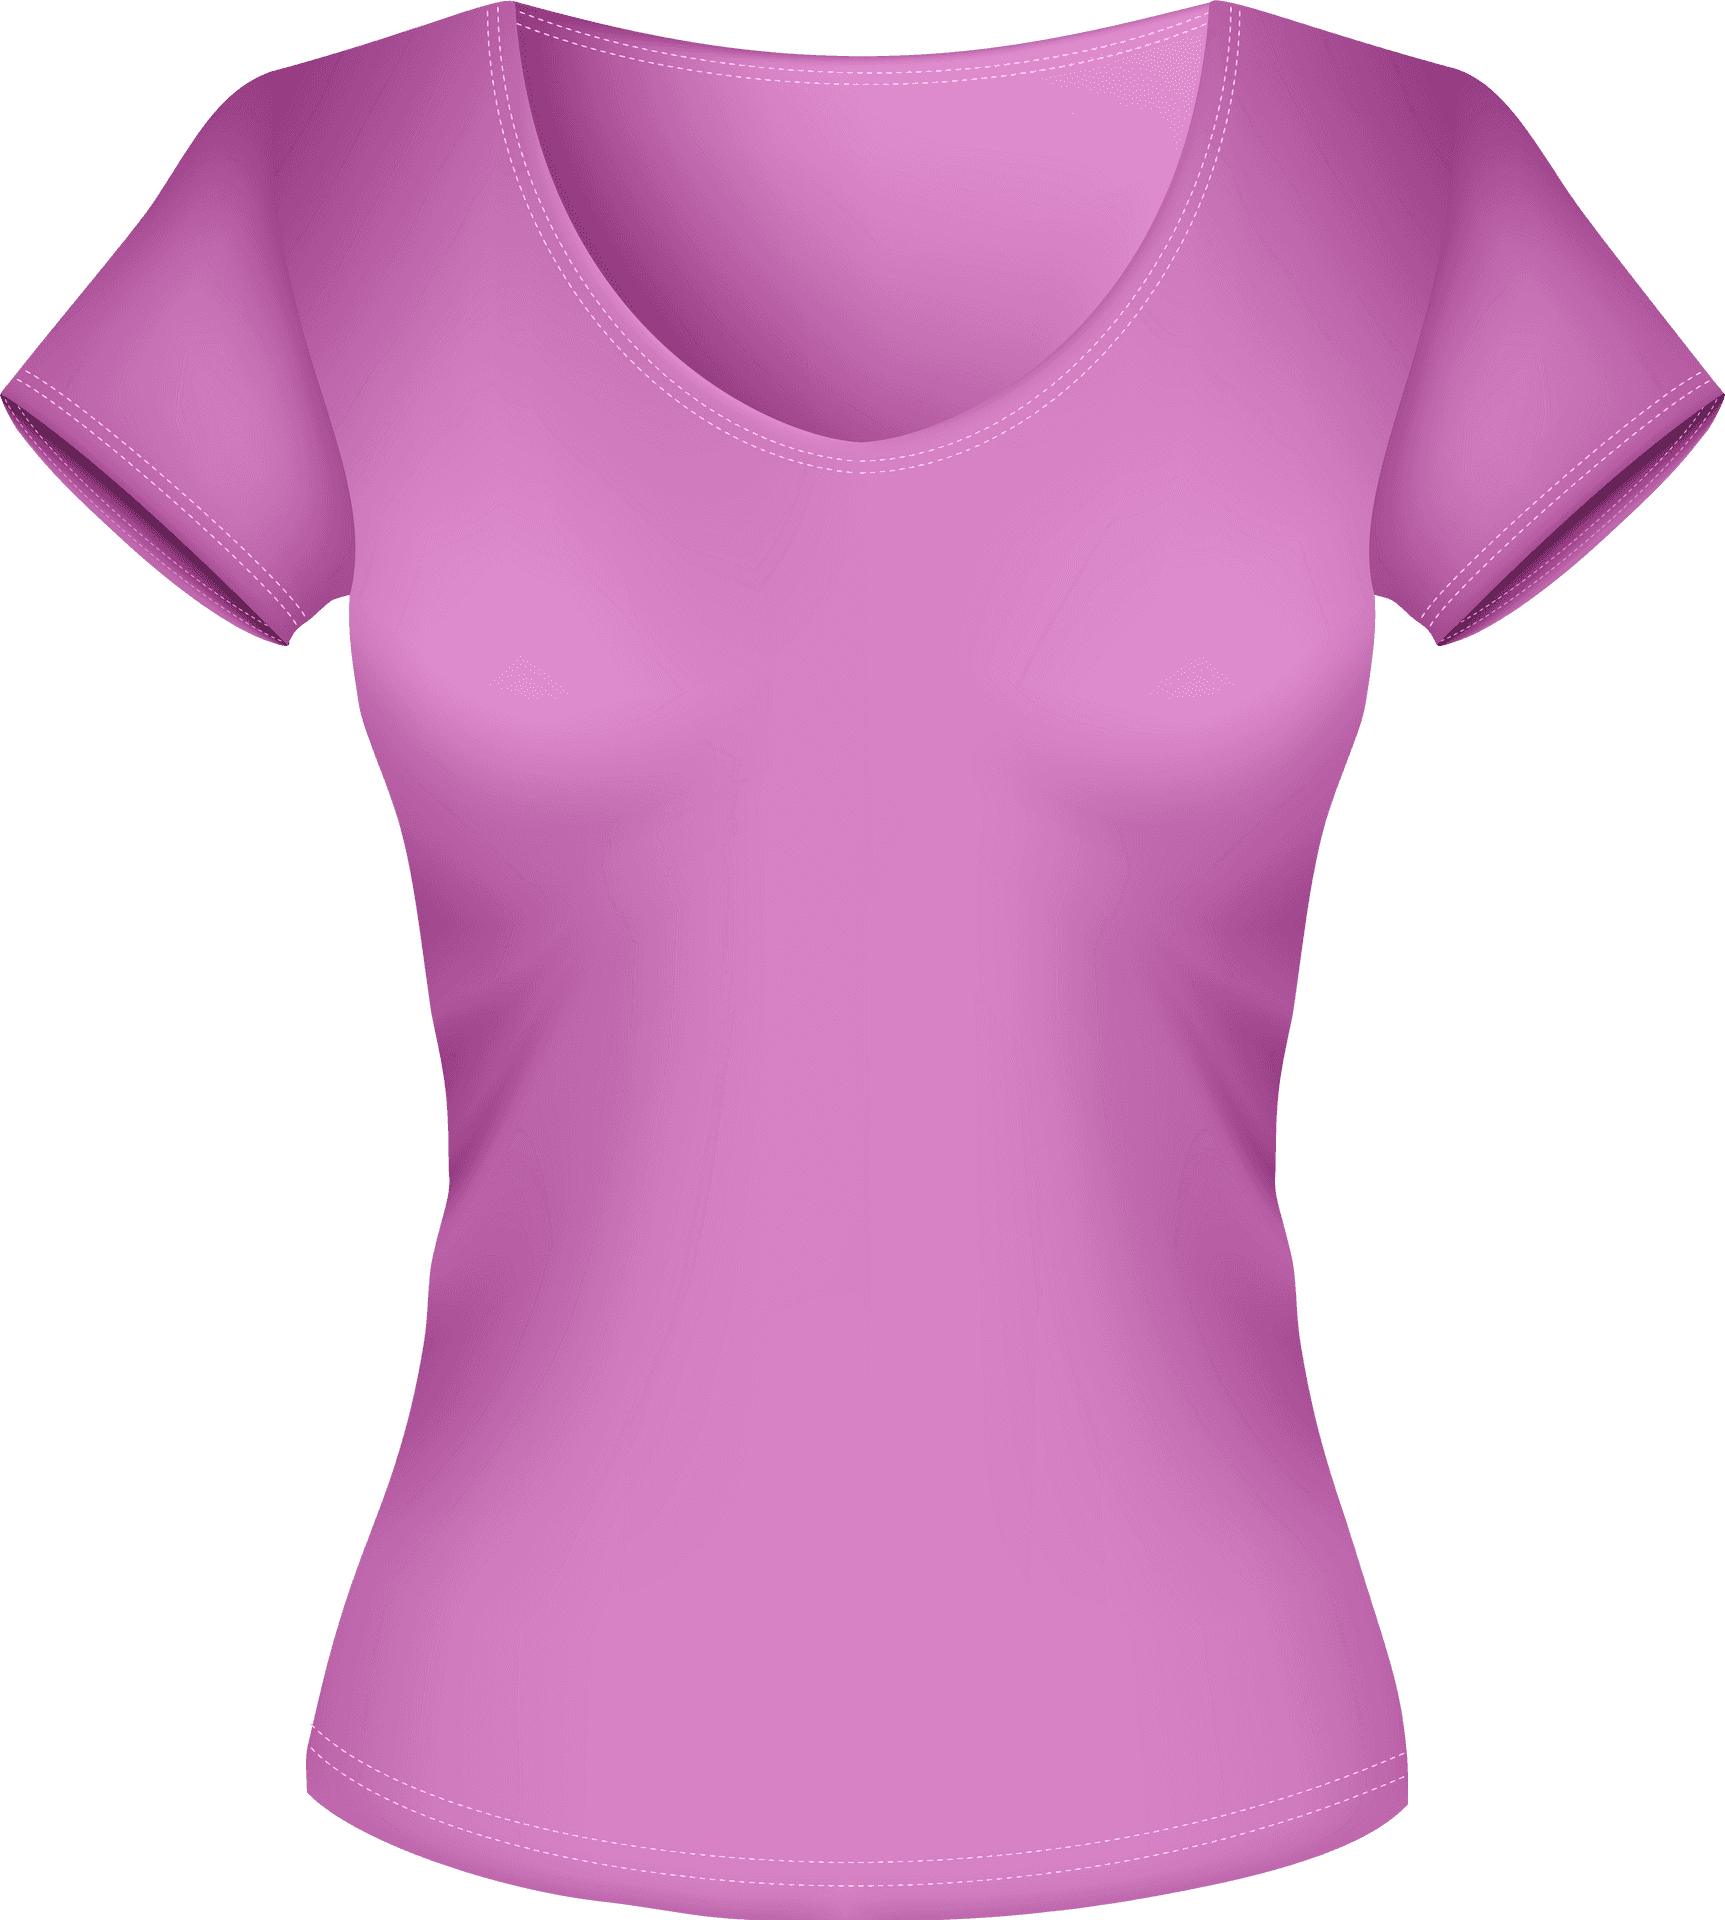 Download Pink Short Sleeve Blouse Mockup | Wallpapers.com